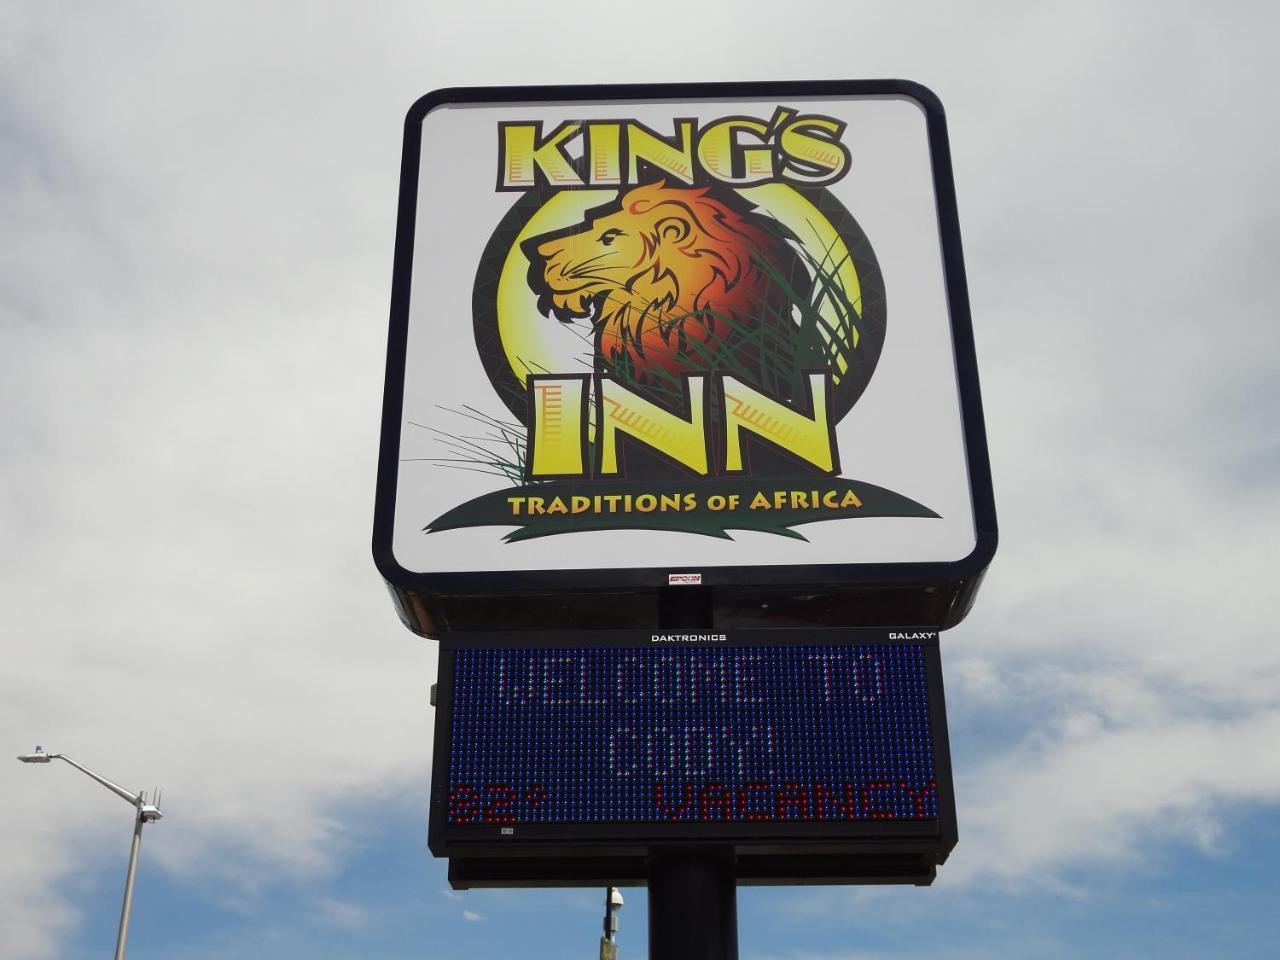 Kings Inn Cody Buitenkant foto